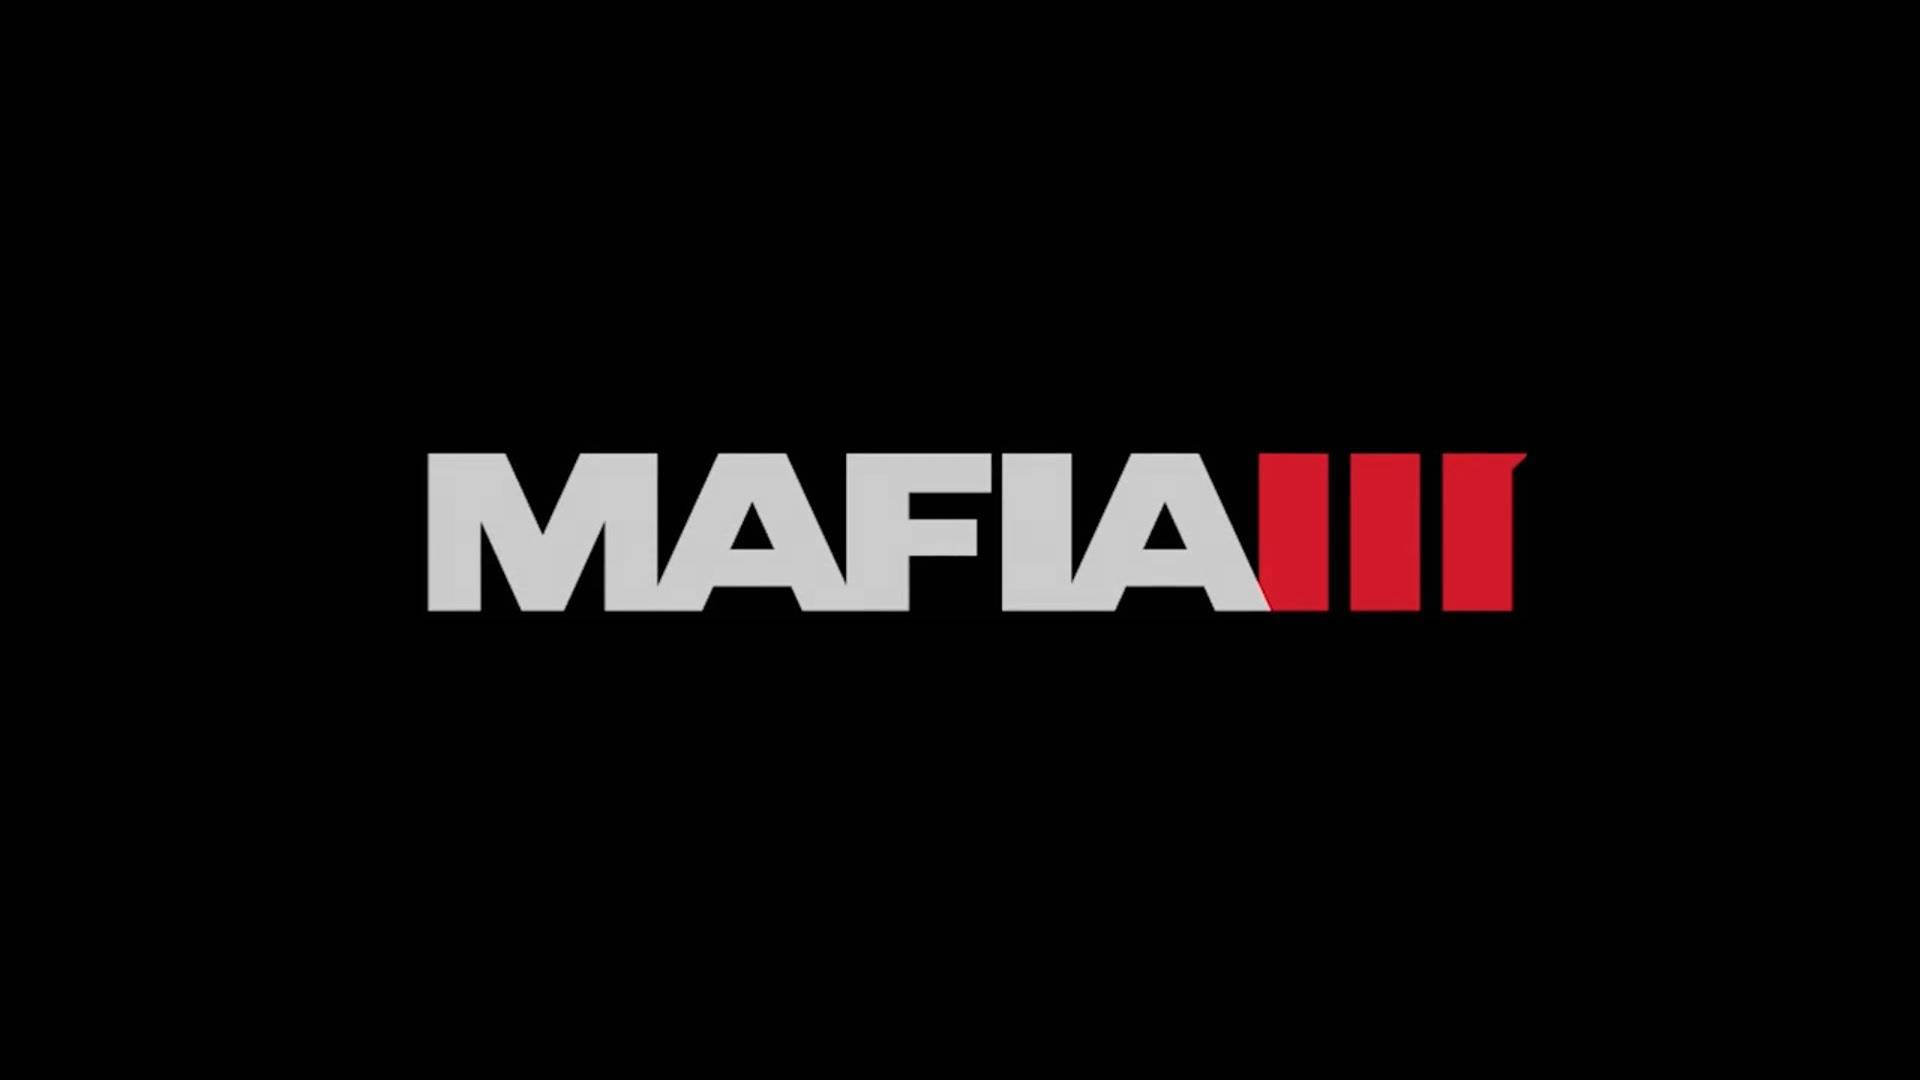 Video Game Mafia III HD Wallpaper | Background Image